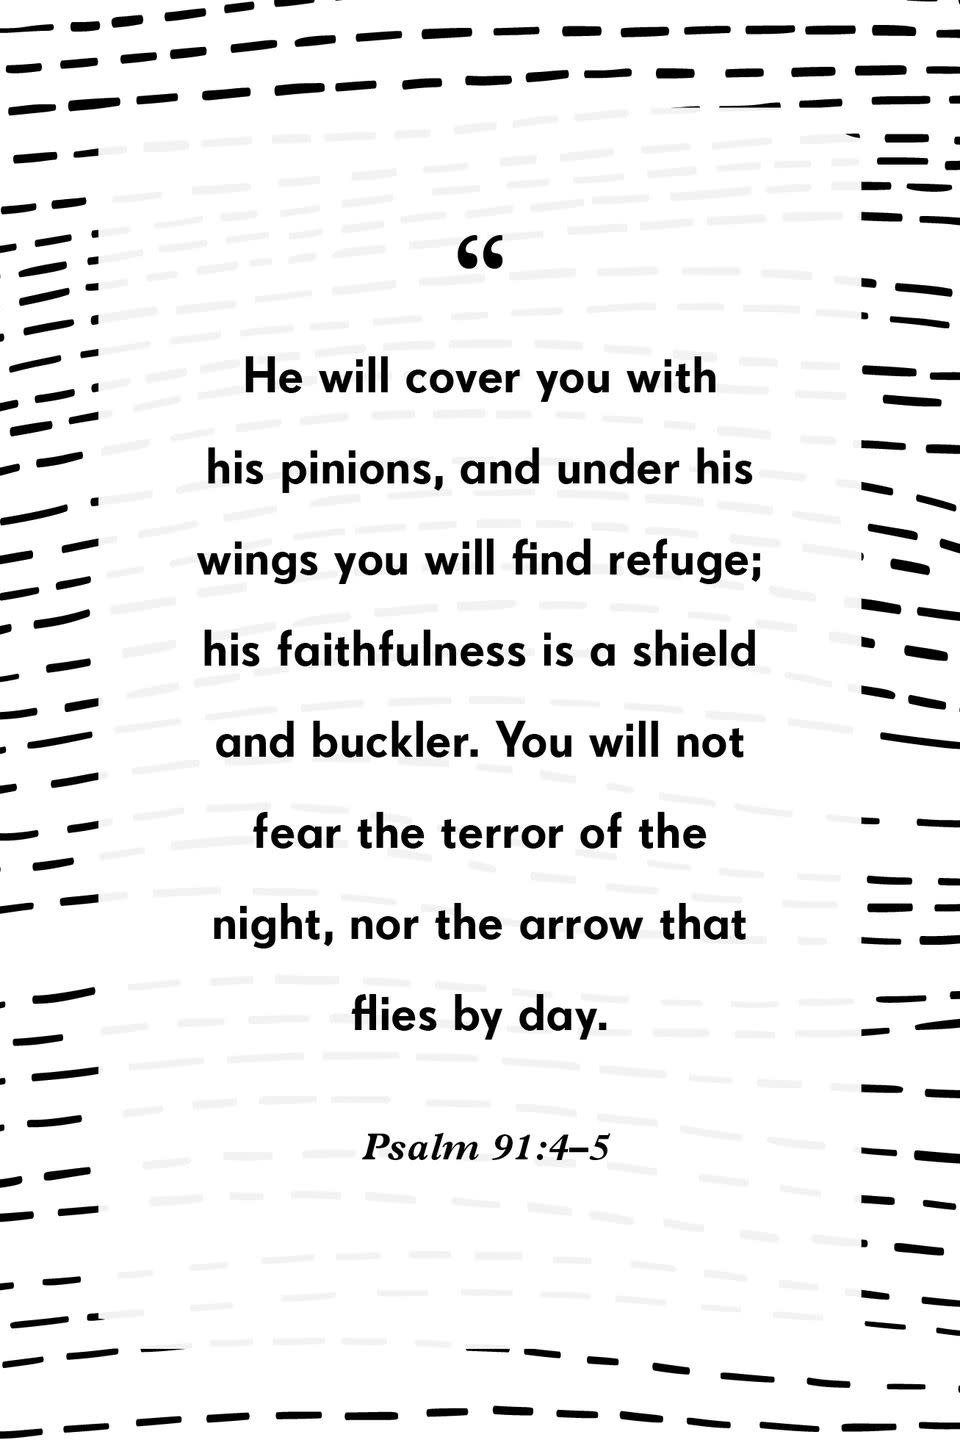 9) Psalm 91:4–5